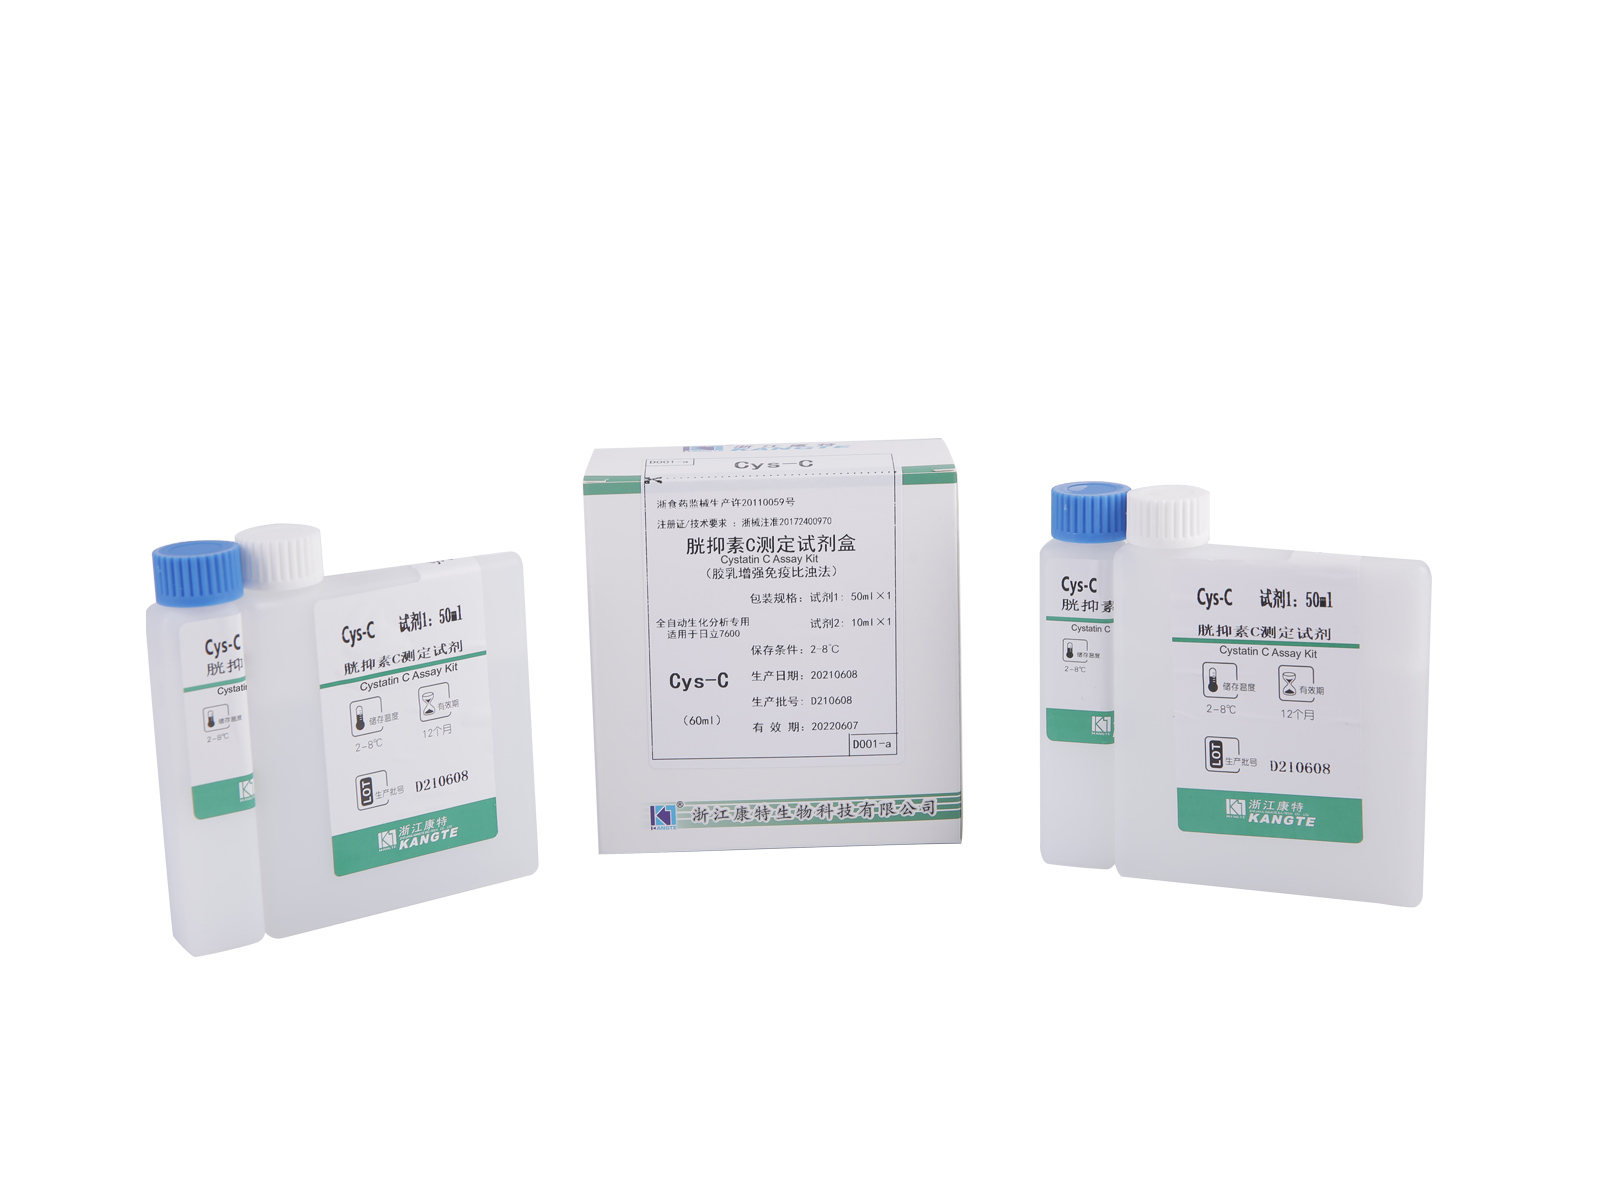 【Cys-C】 Cystatin C Assay Kit (Latex Enhanced Immunoturbidimetric Method)